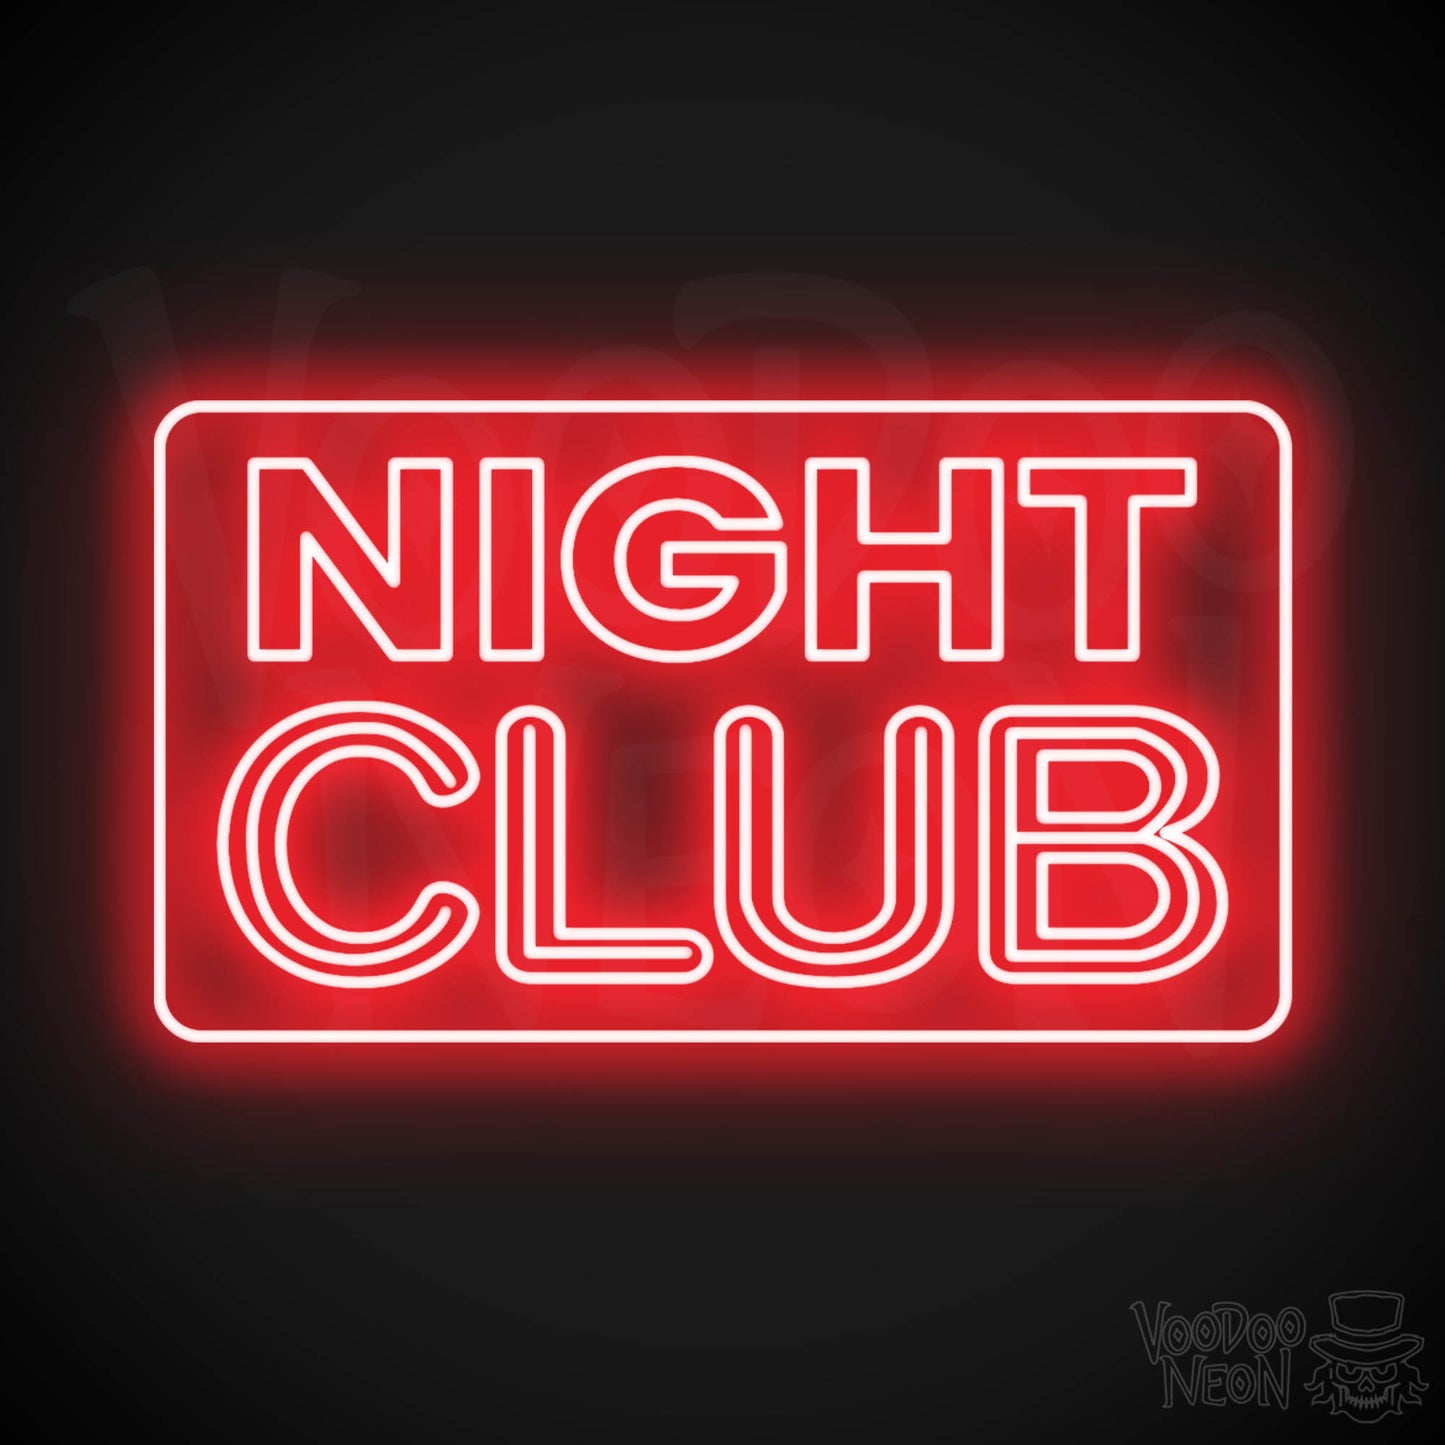 Night Club LED Neon - Red